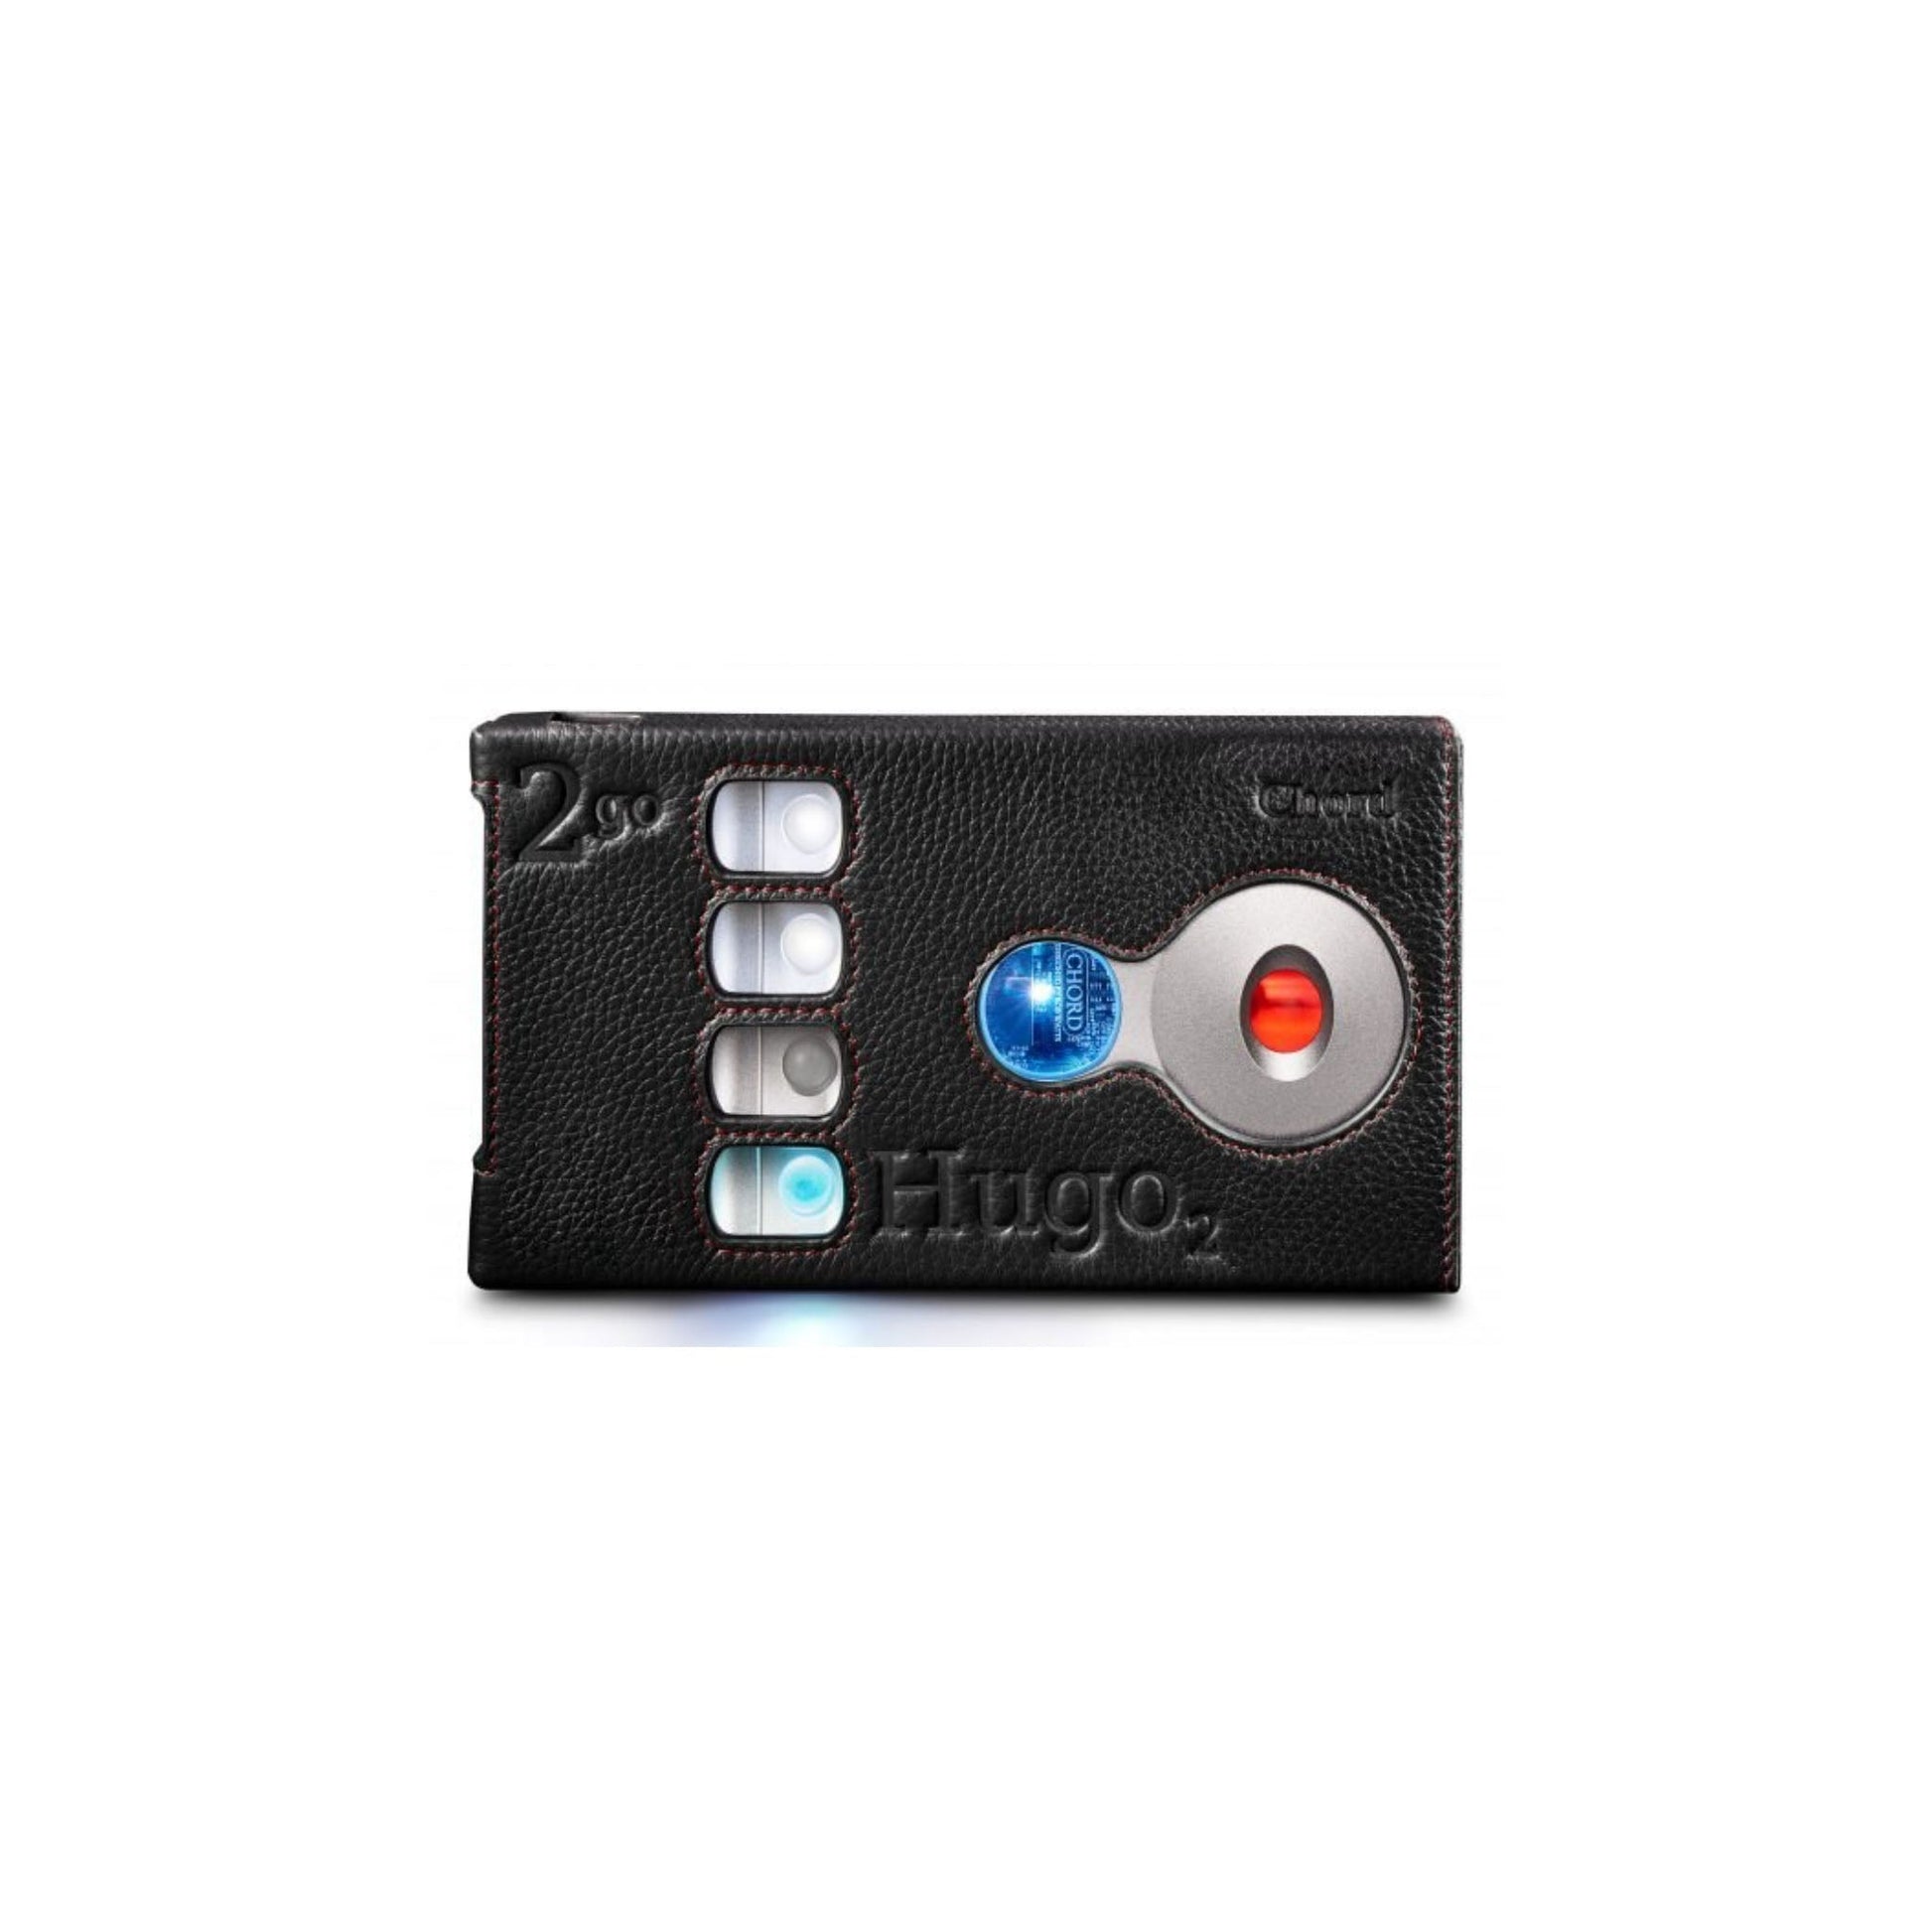  Chord Hugo 2/2go - Premium Leather Case Chord Electronics - Brisbane HiFi